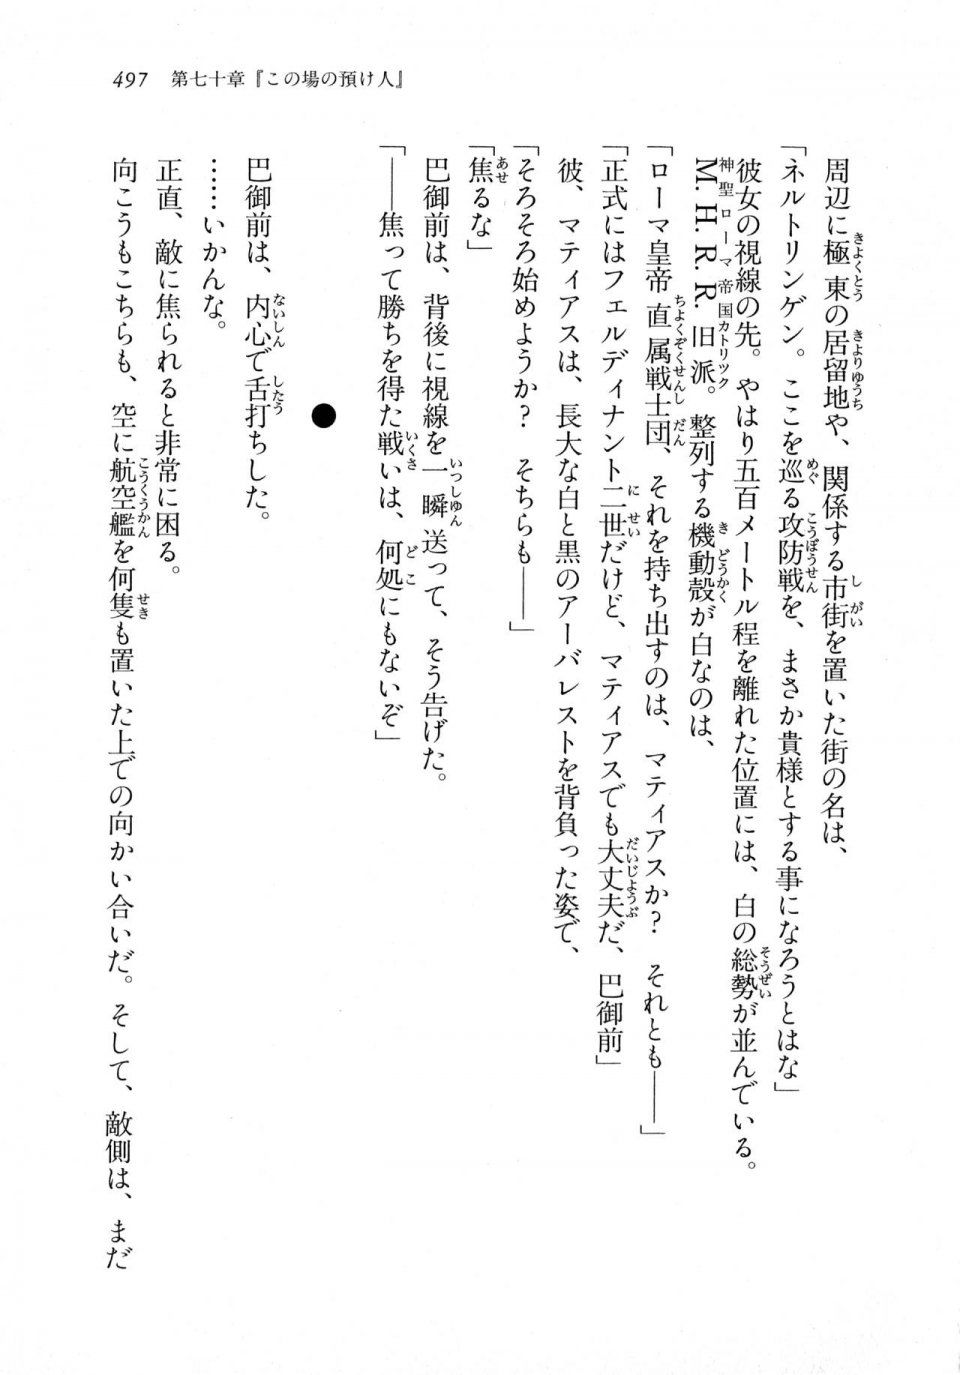 Kyoukai Senjou no Horizon LN Vol 18(7C) Part 1 - Photo #497